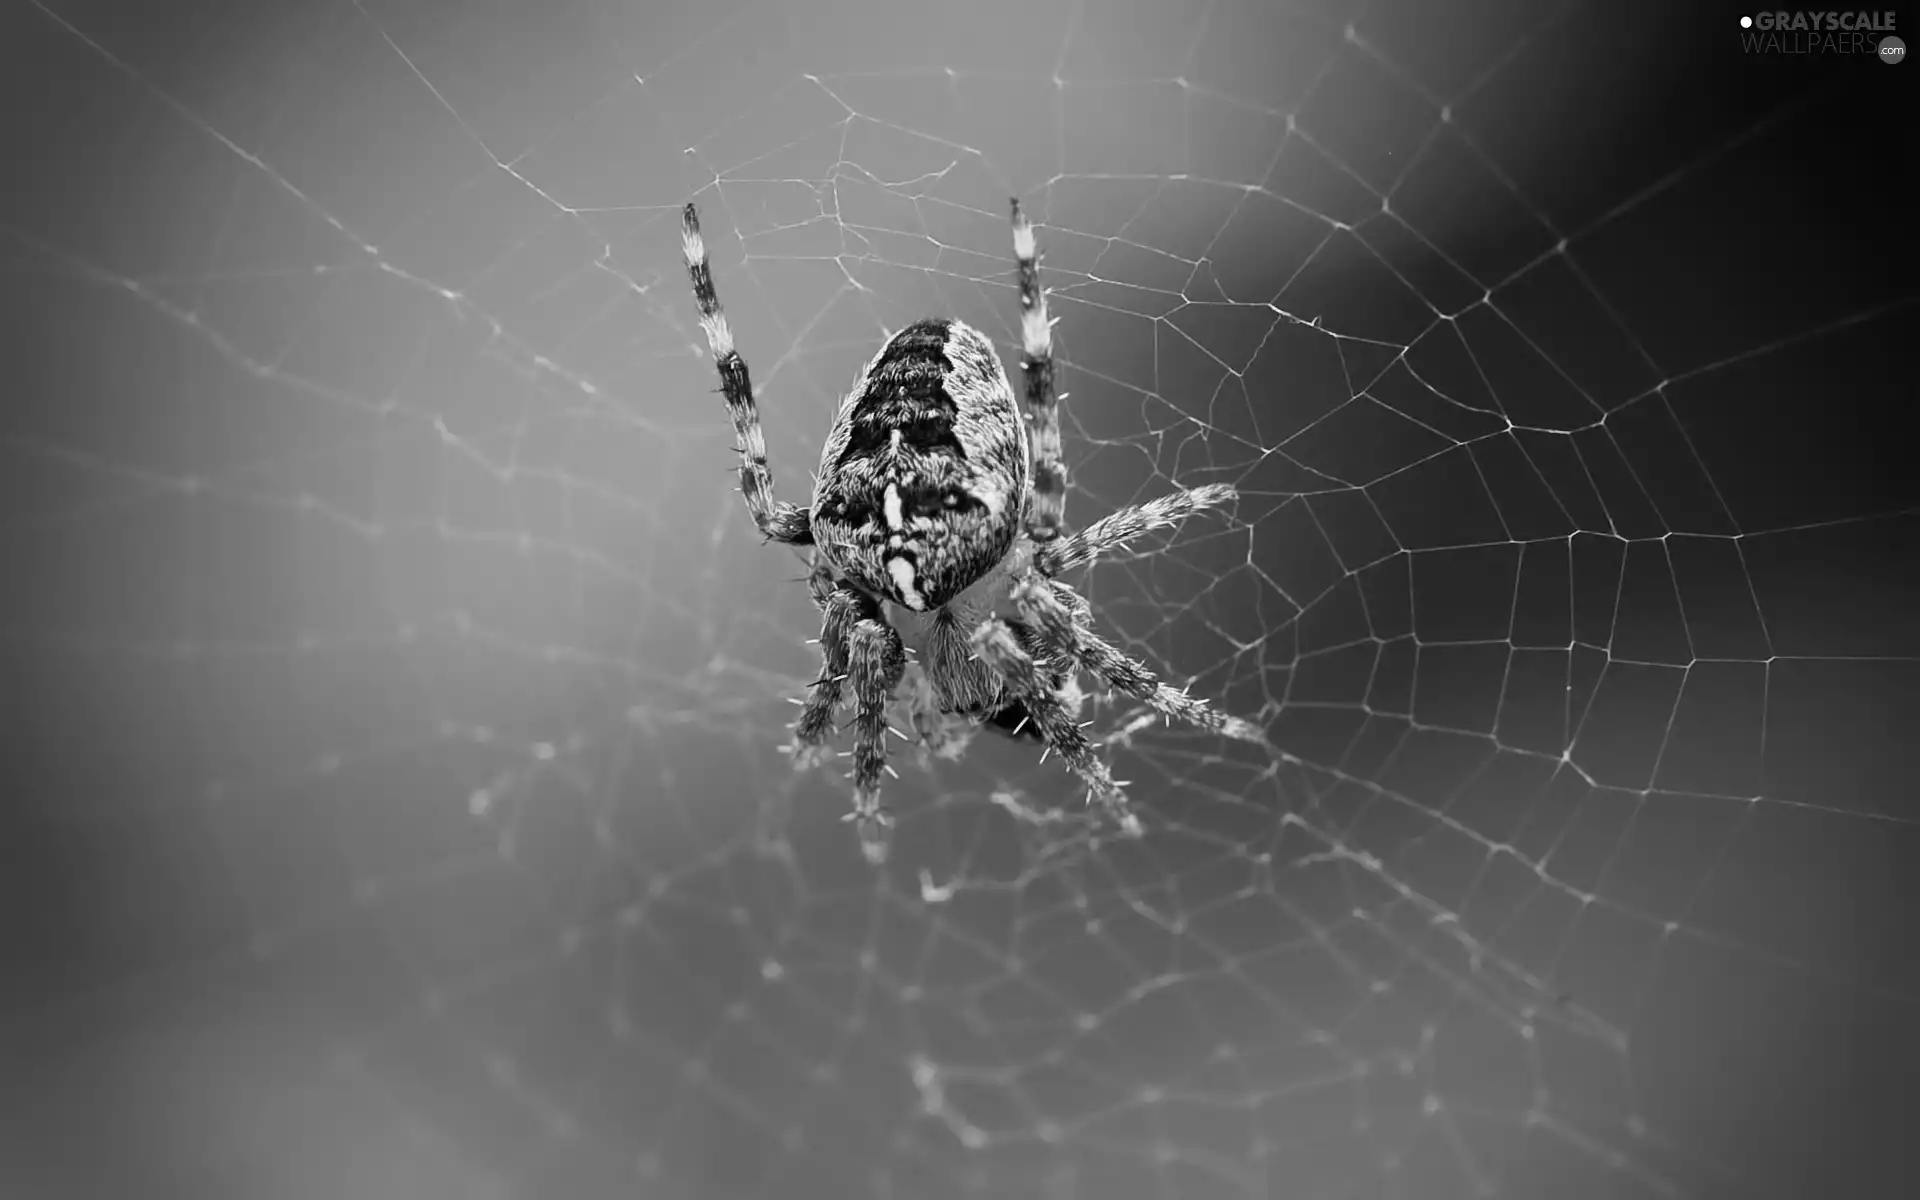 trestle, Web, Spider